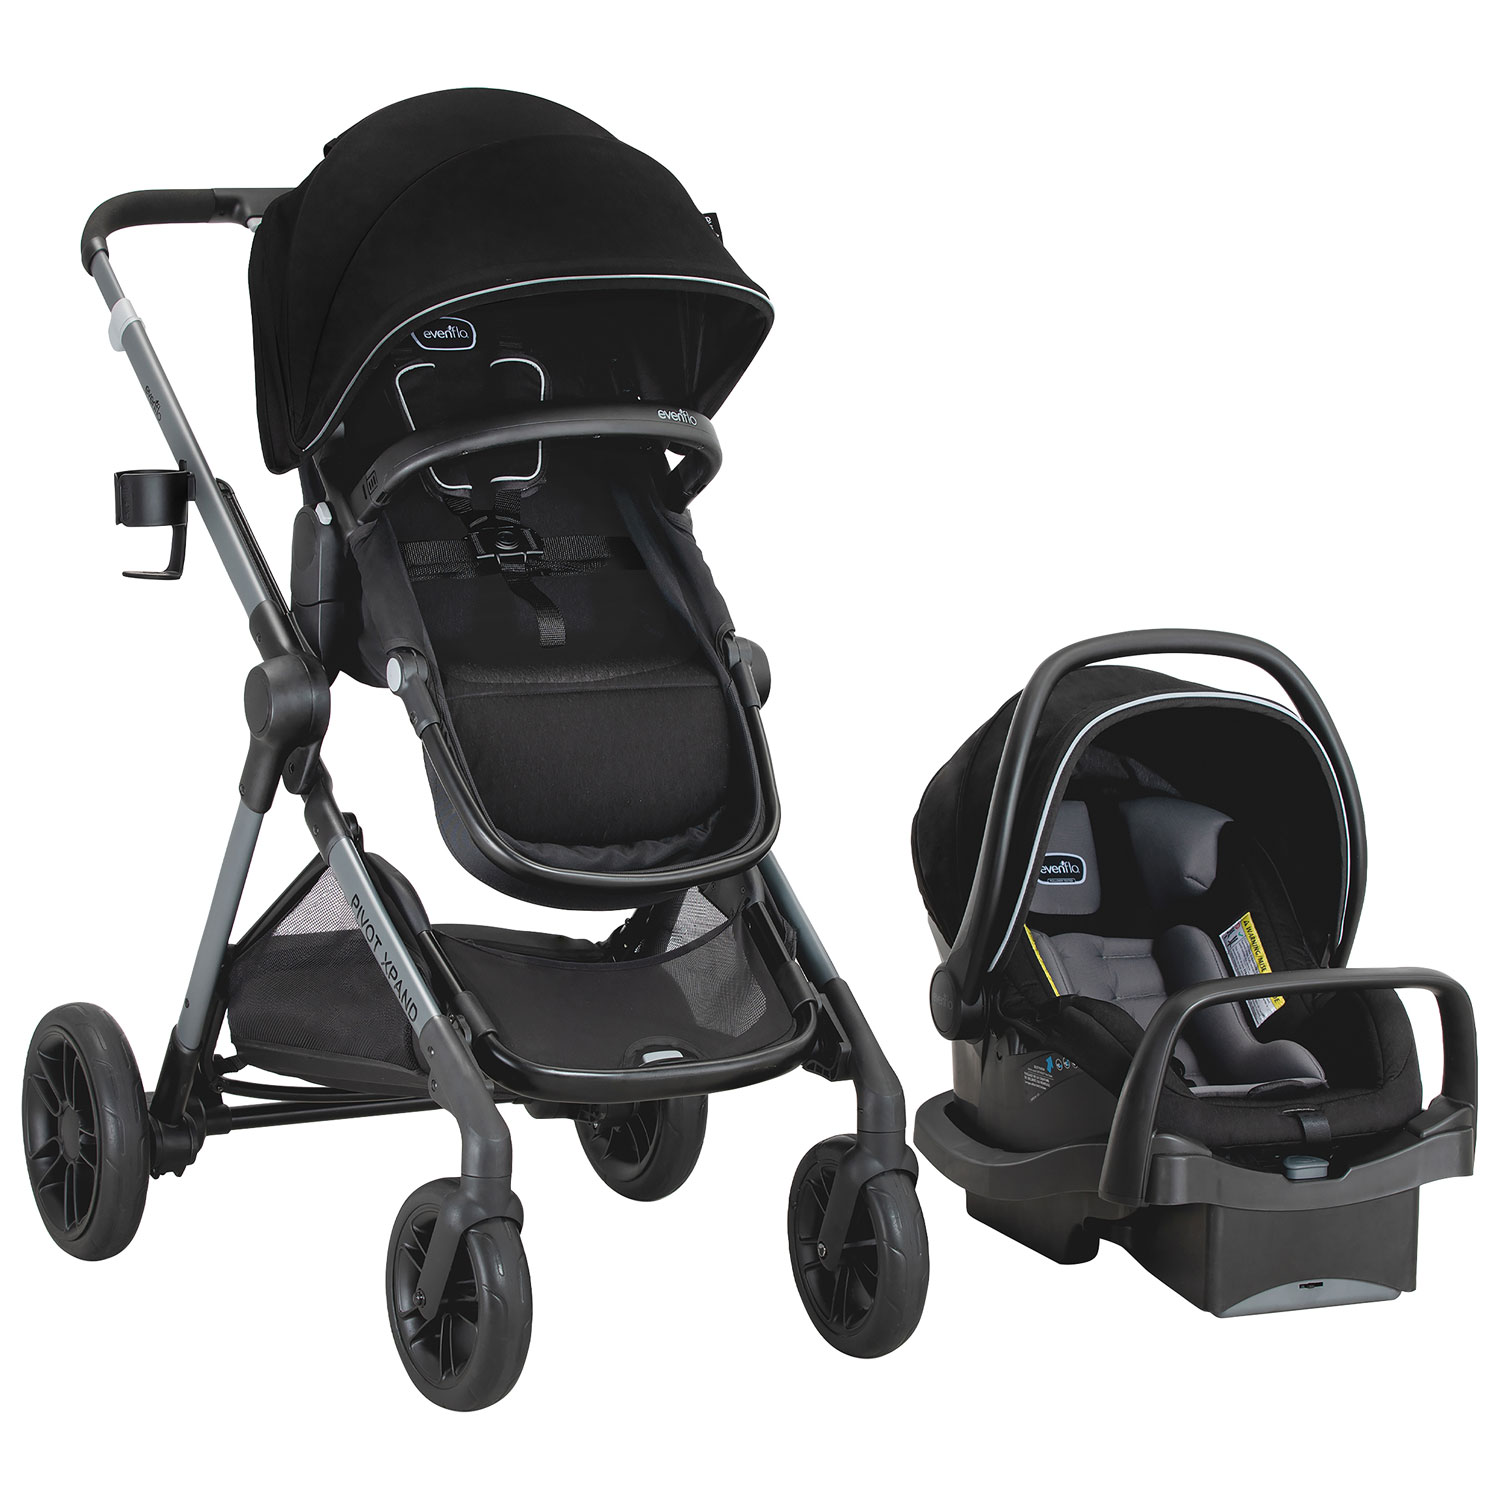 Evenflo Pivot Xpand Modular Stroller with LiteMax Infant Car Seat - Ayrshire Black